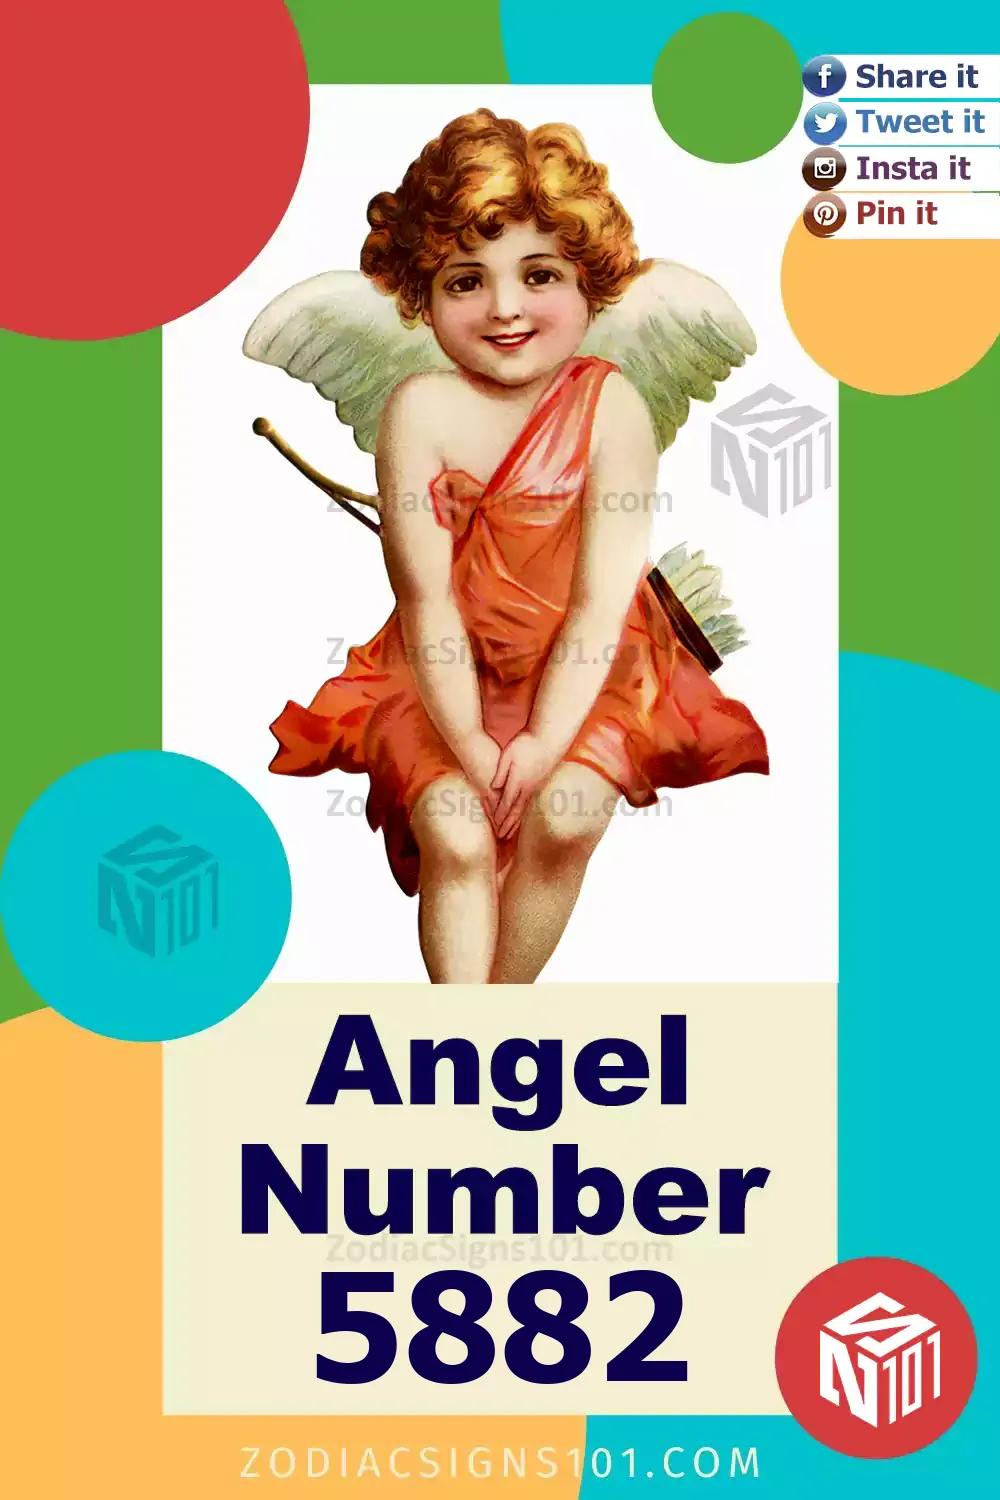 5882-Angel-Number-Meaning.jpg